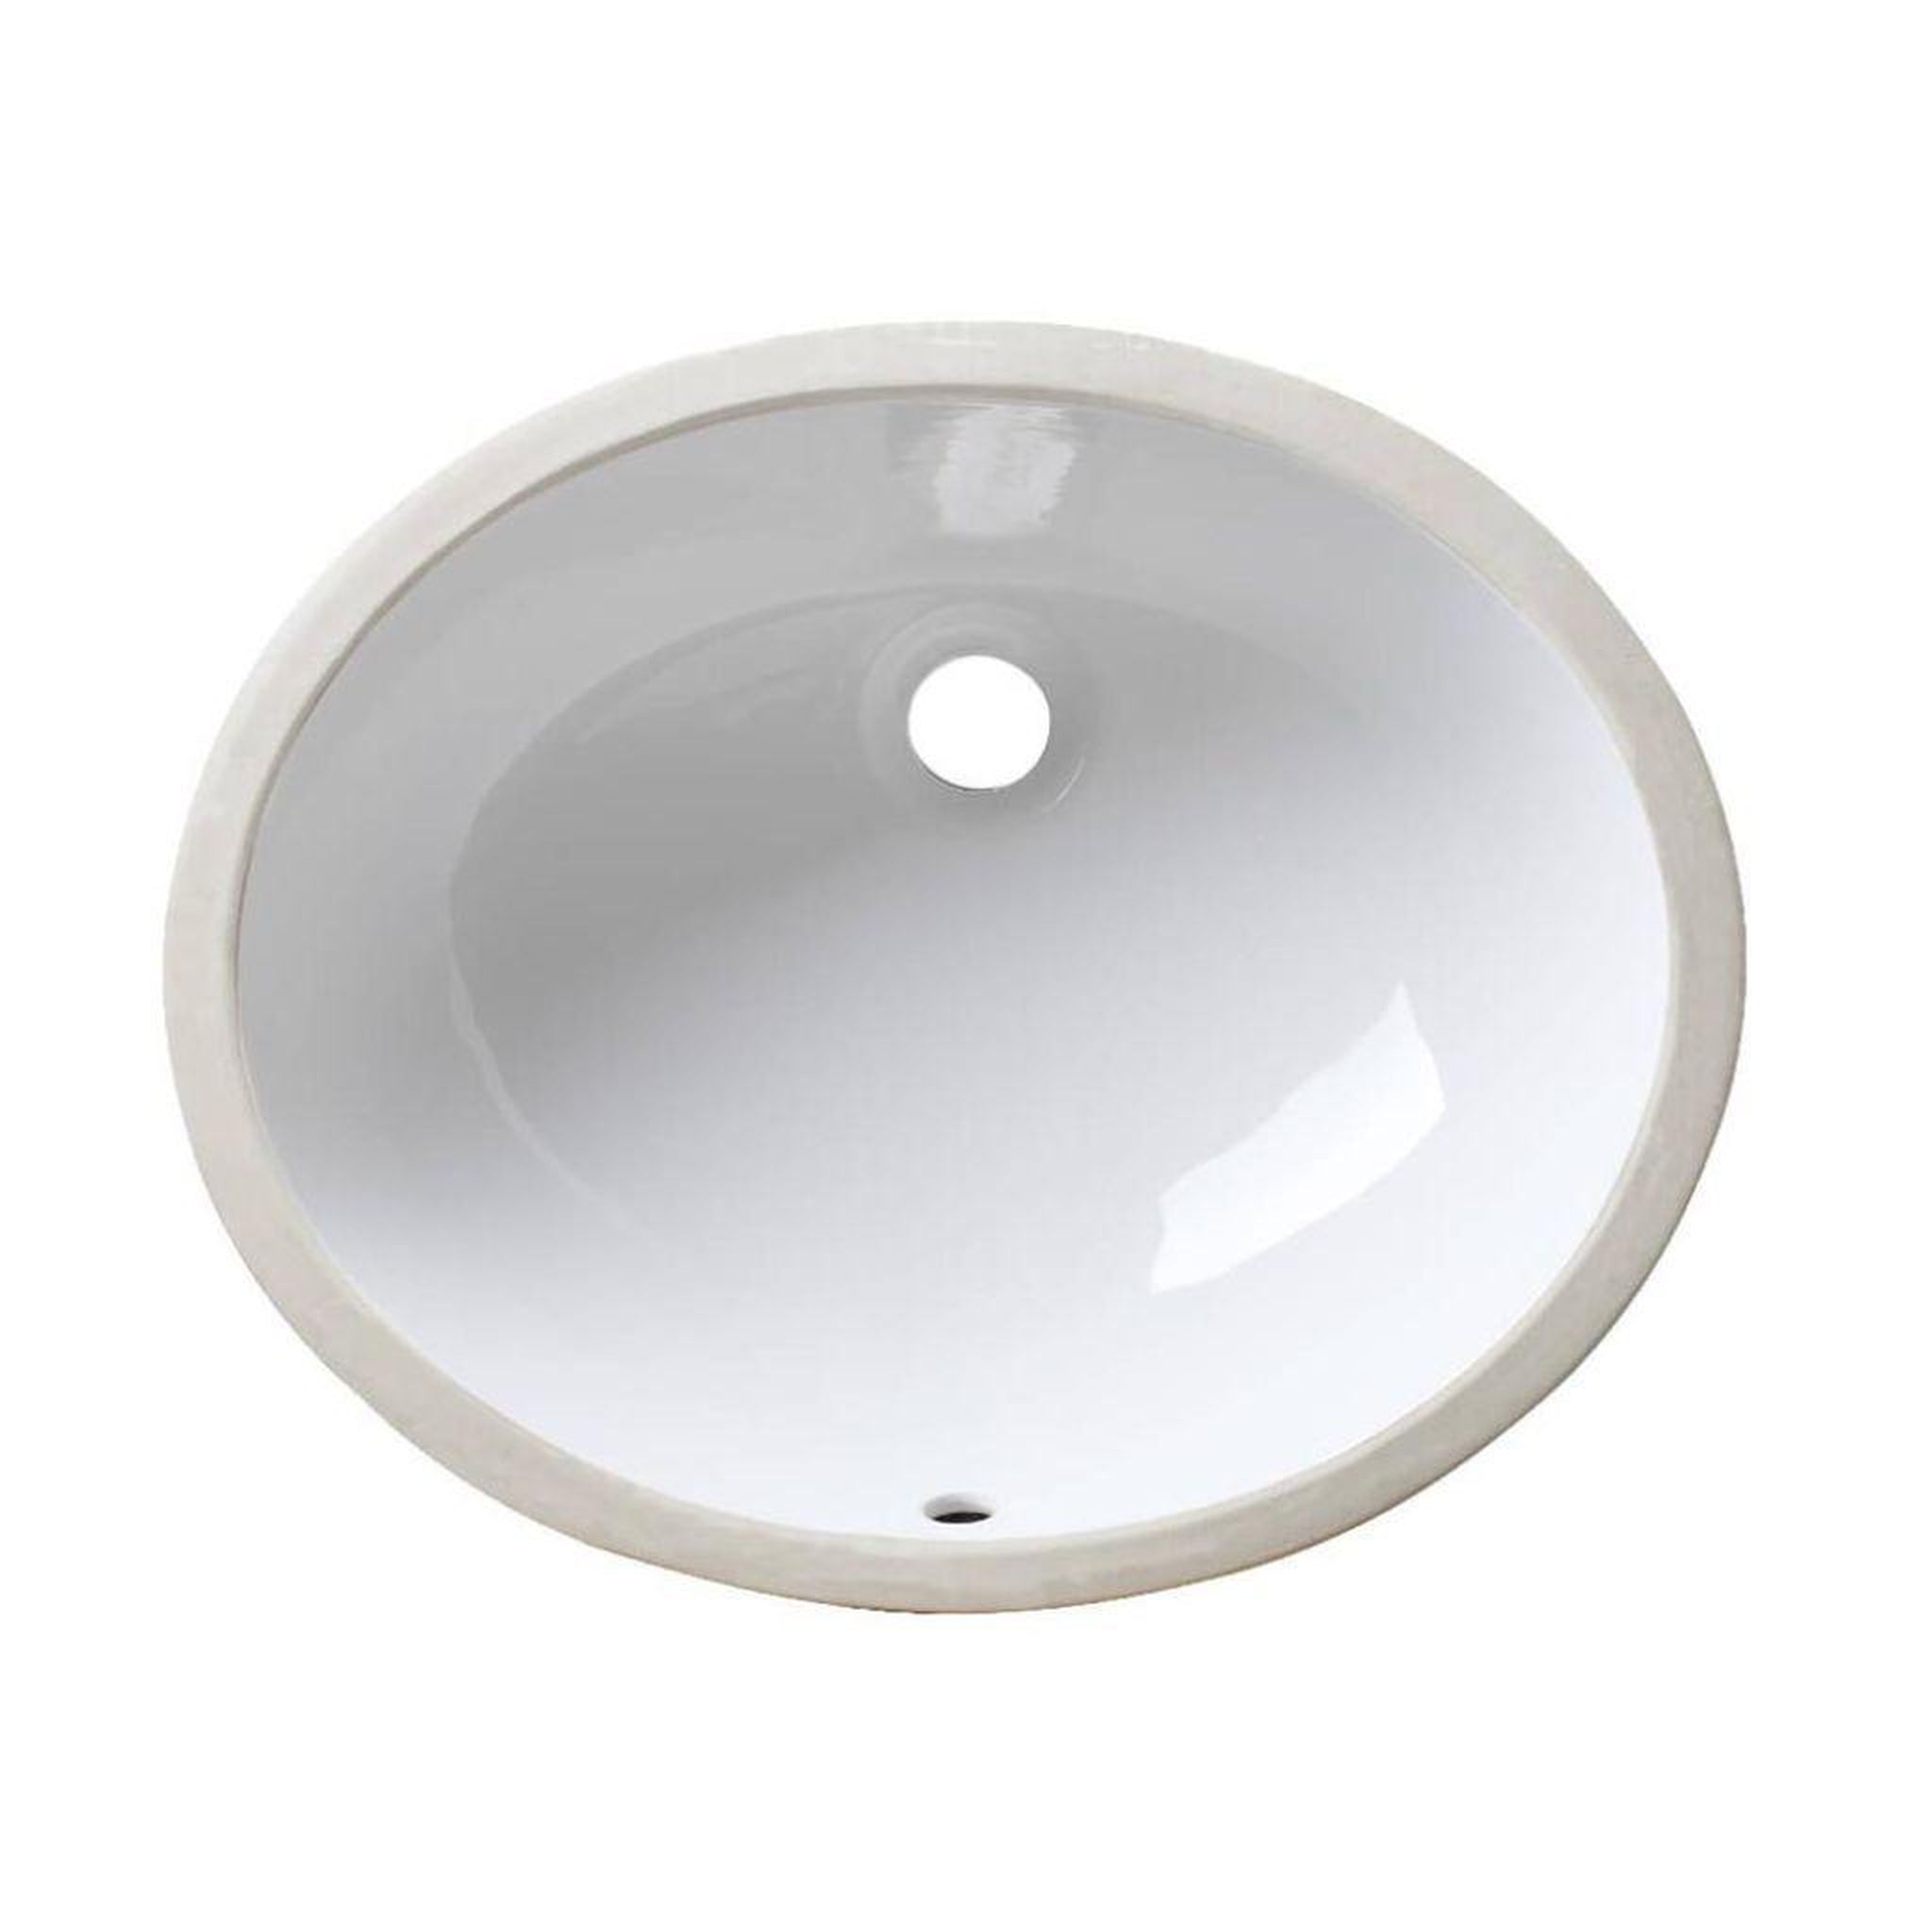 Allora USA, Allora USA 19.5" X 16" Vitreous China White Oval Porcelain Undermount Sink with Overflow